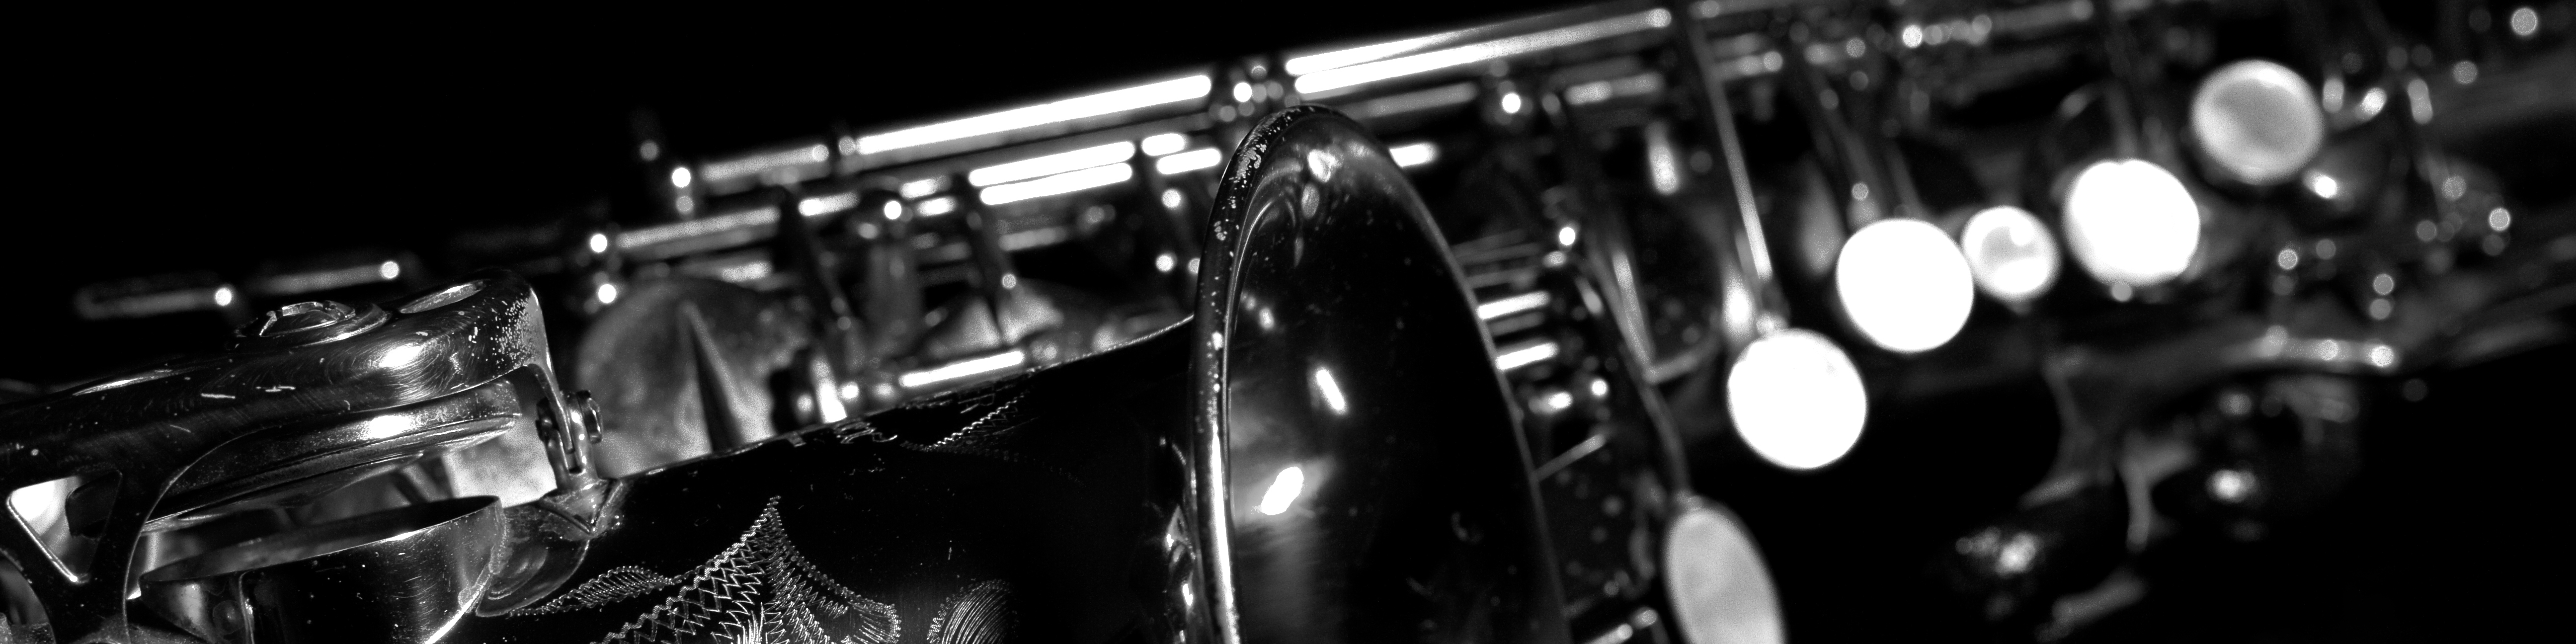 Saxophone - cc-by : kinchan1